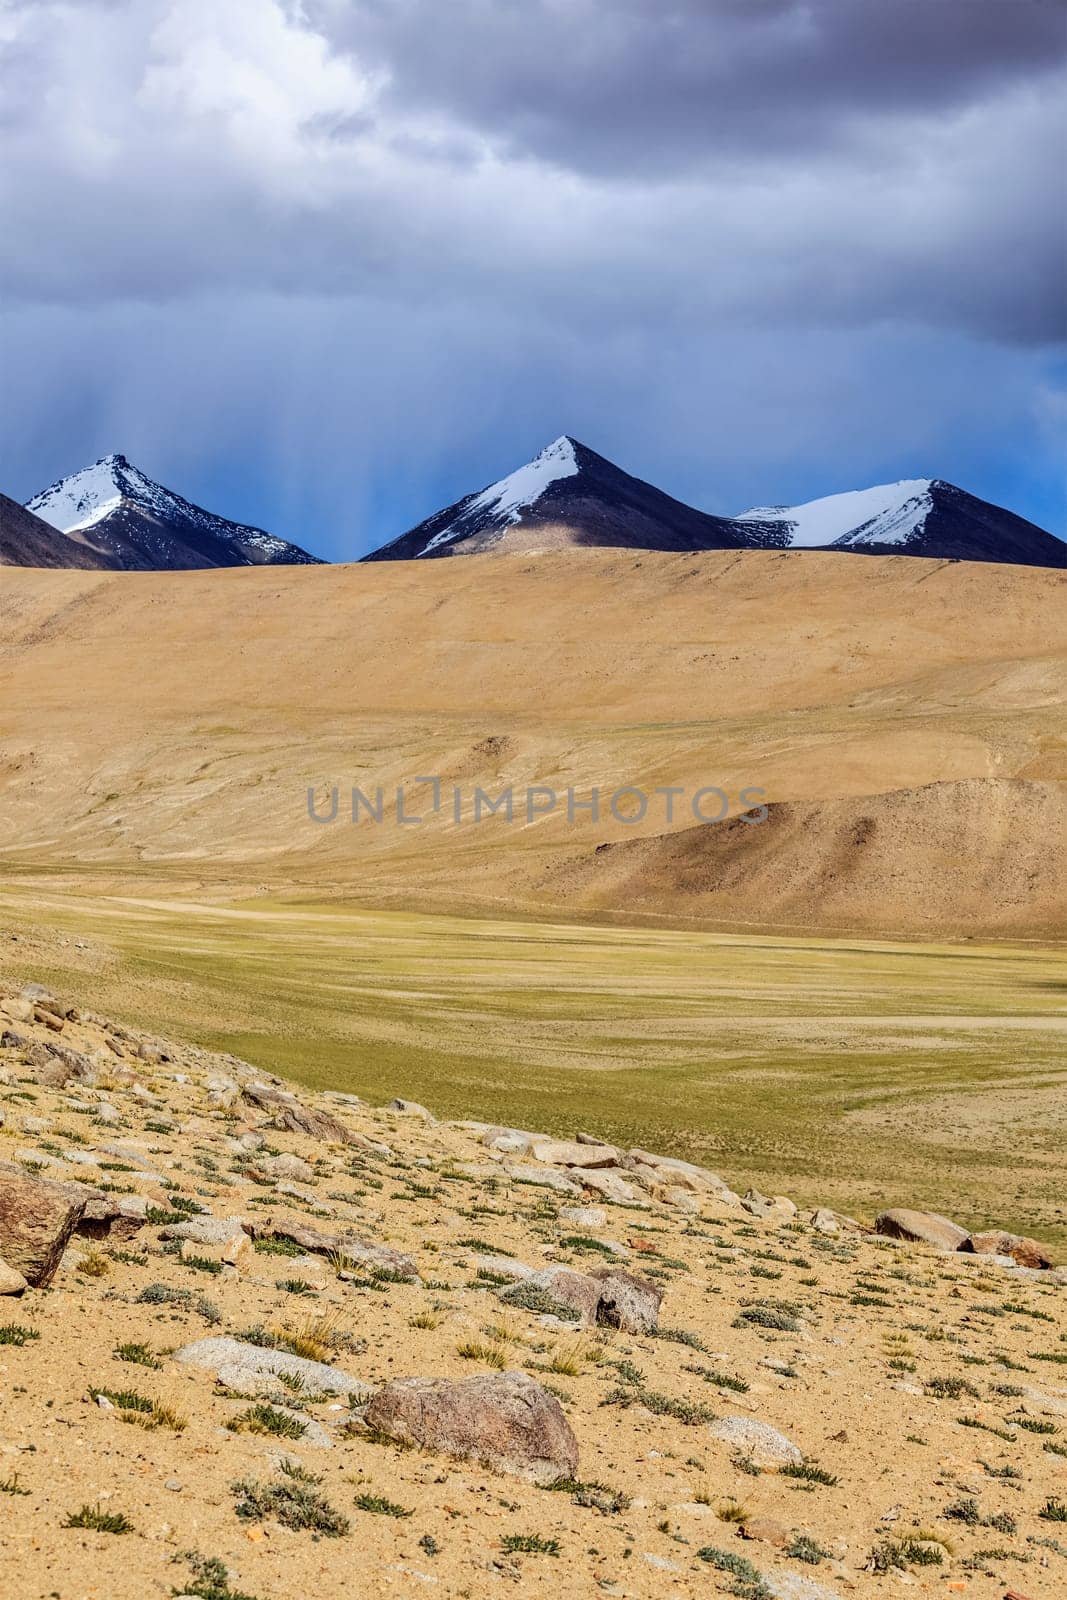 Himalayan landscape near Kyagar Tso lake, Ladakh, India by dimol